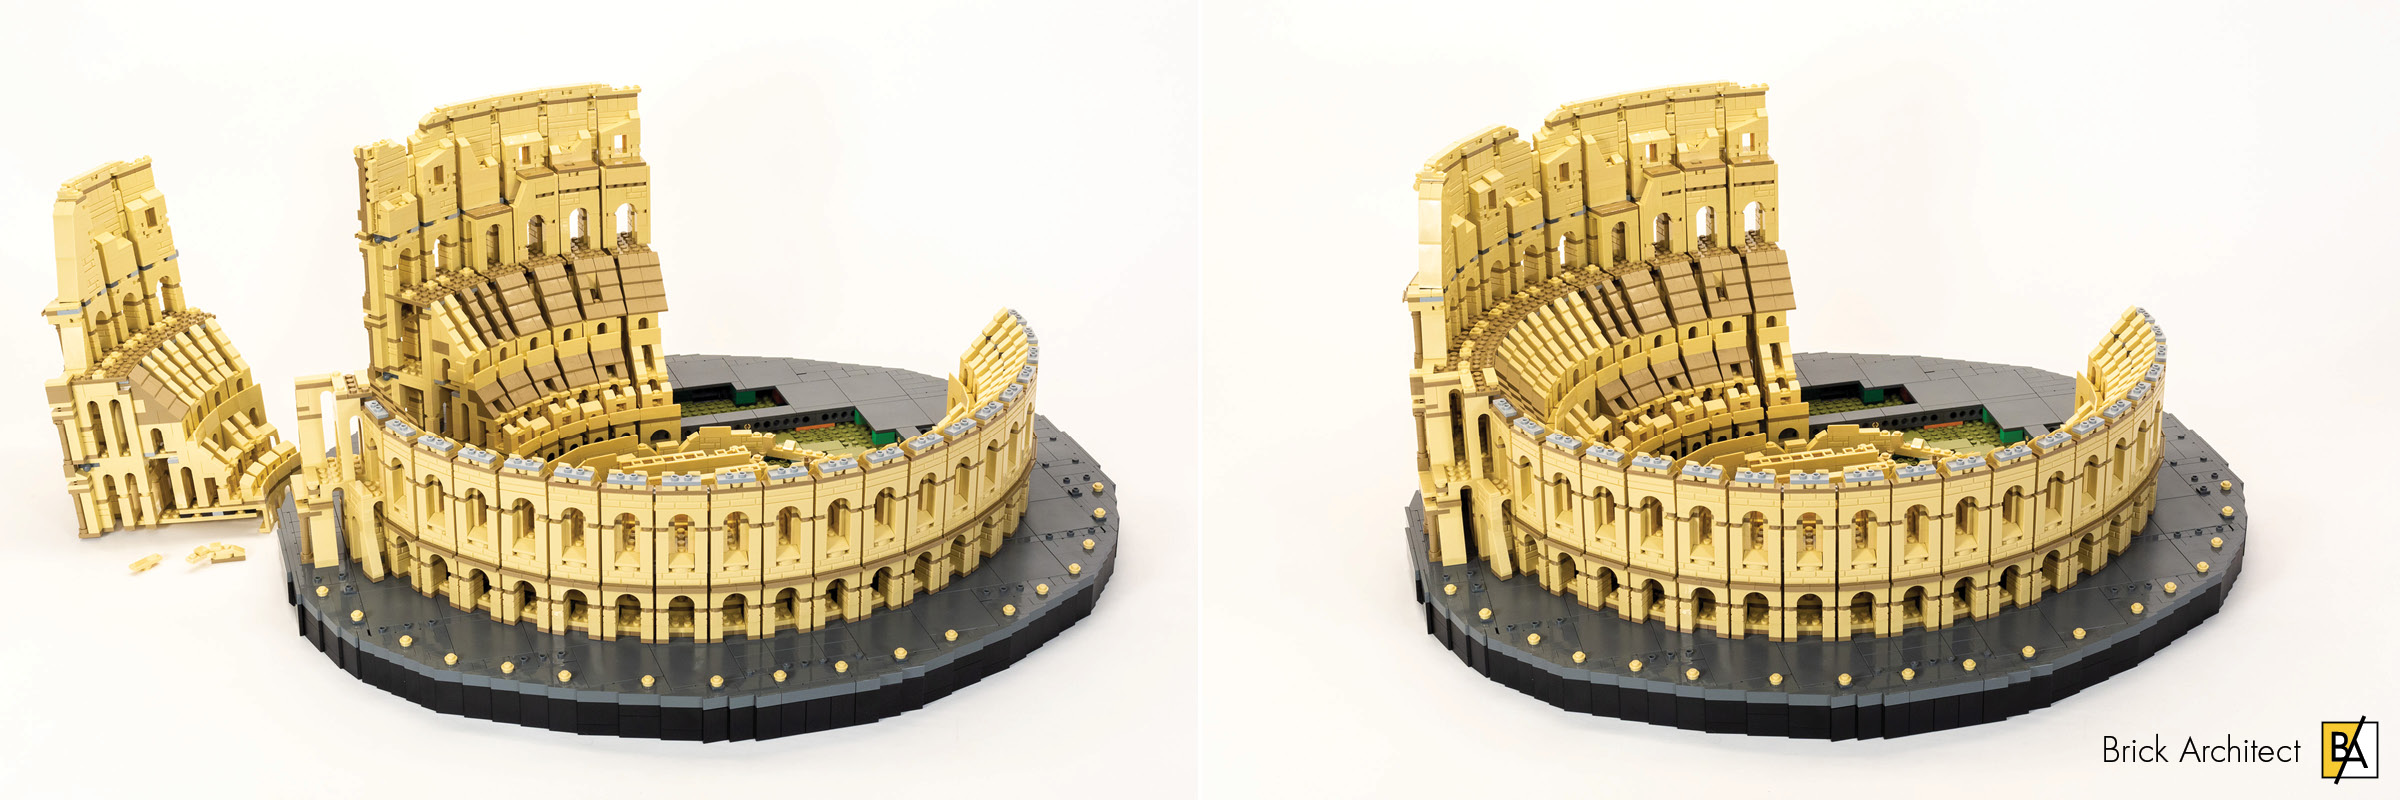 The LEGO Colosseum - Stuck In Plastic